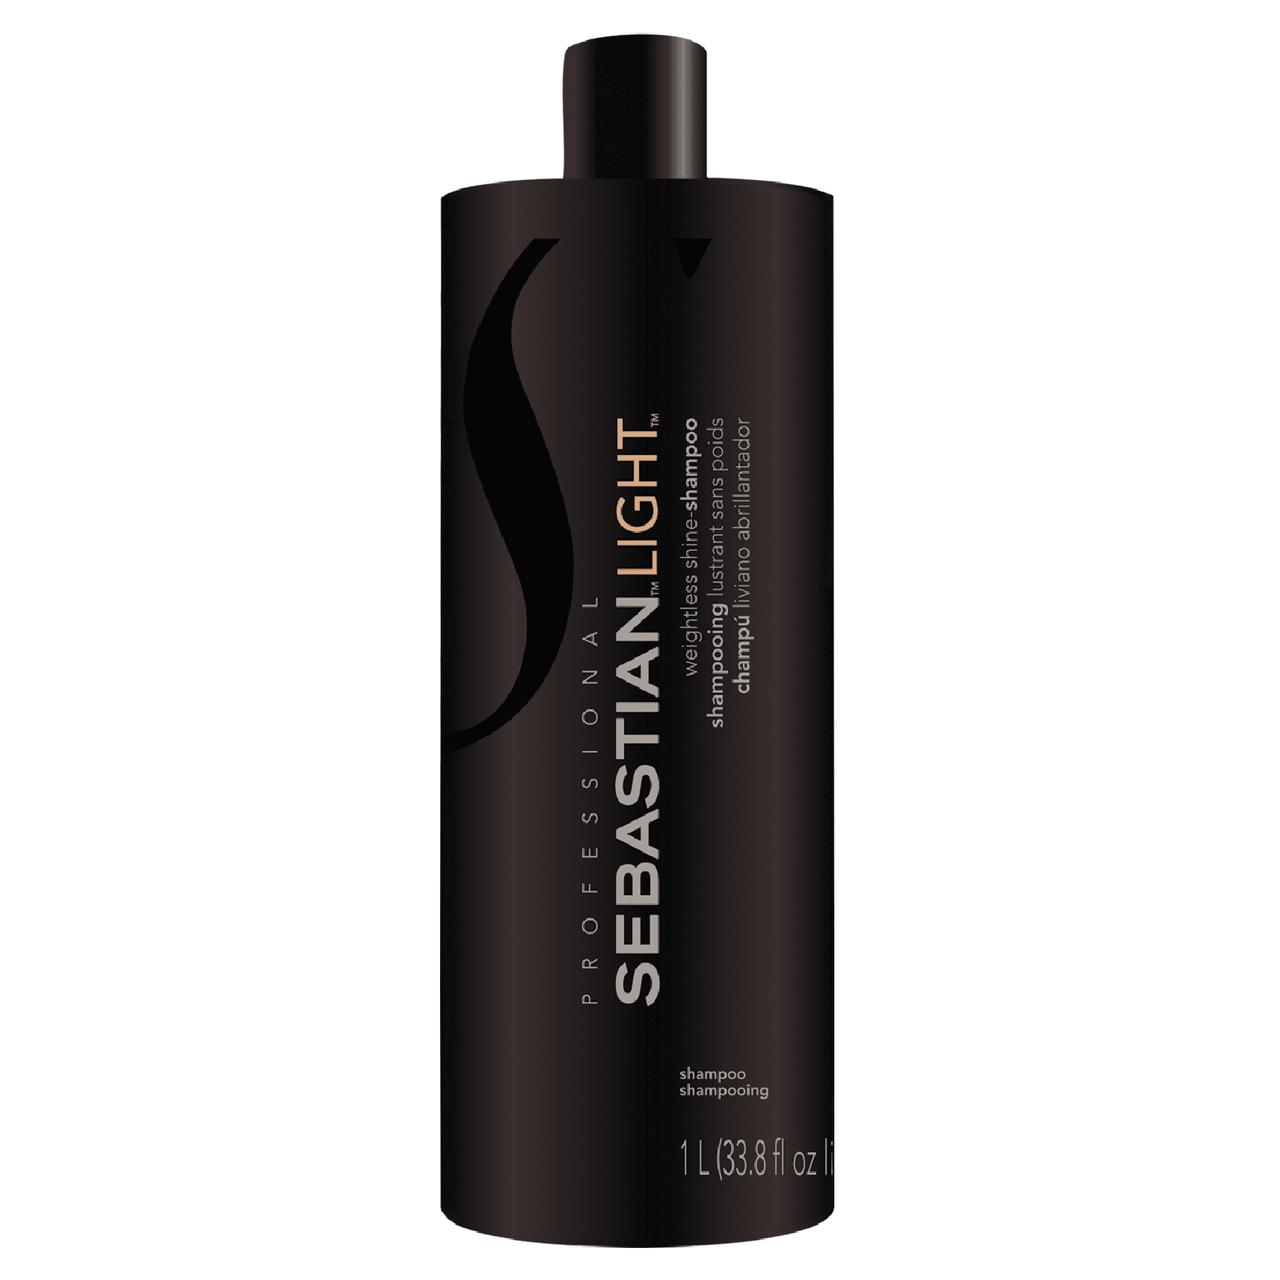 Sebastian Light Shampoo 33.8 fl oz